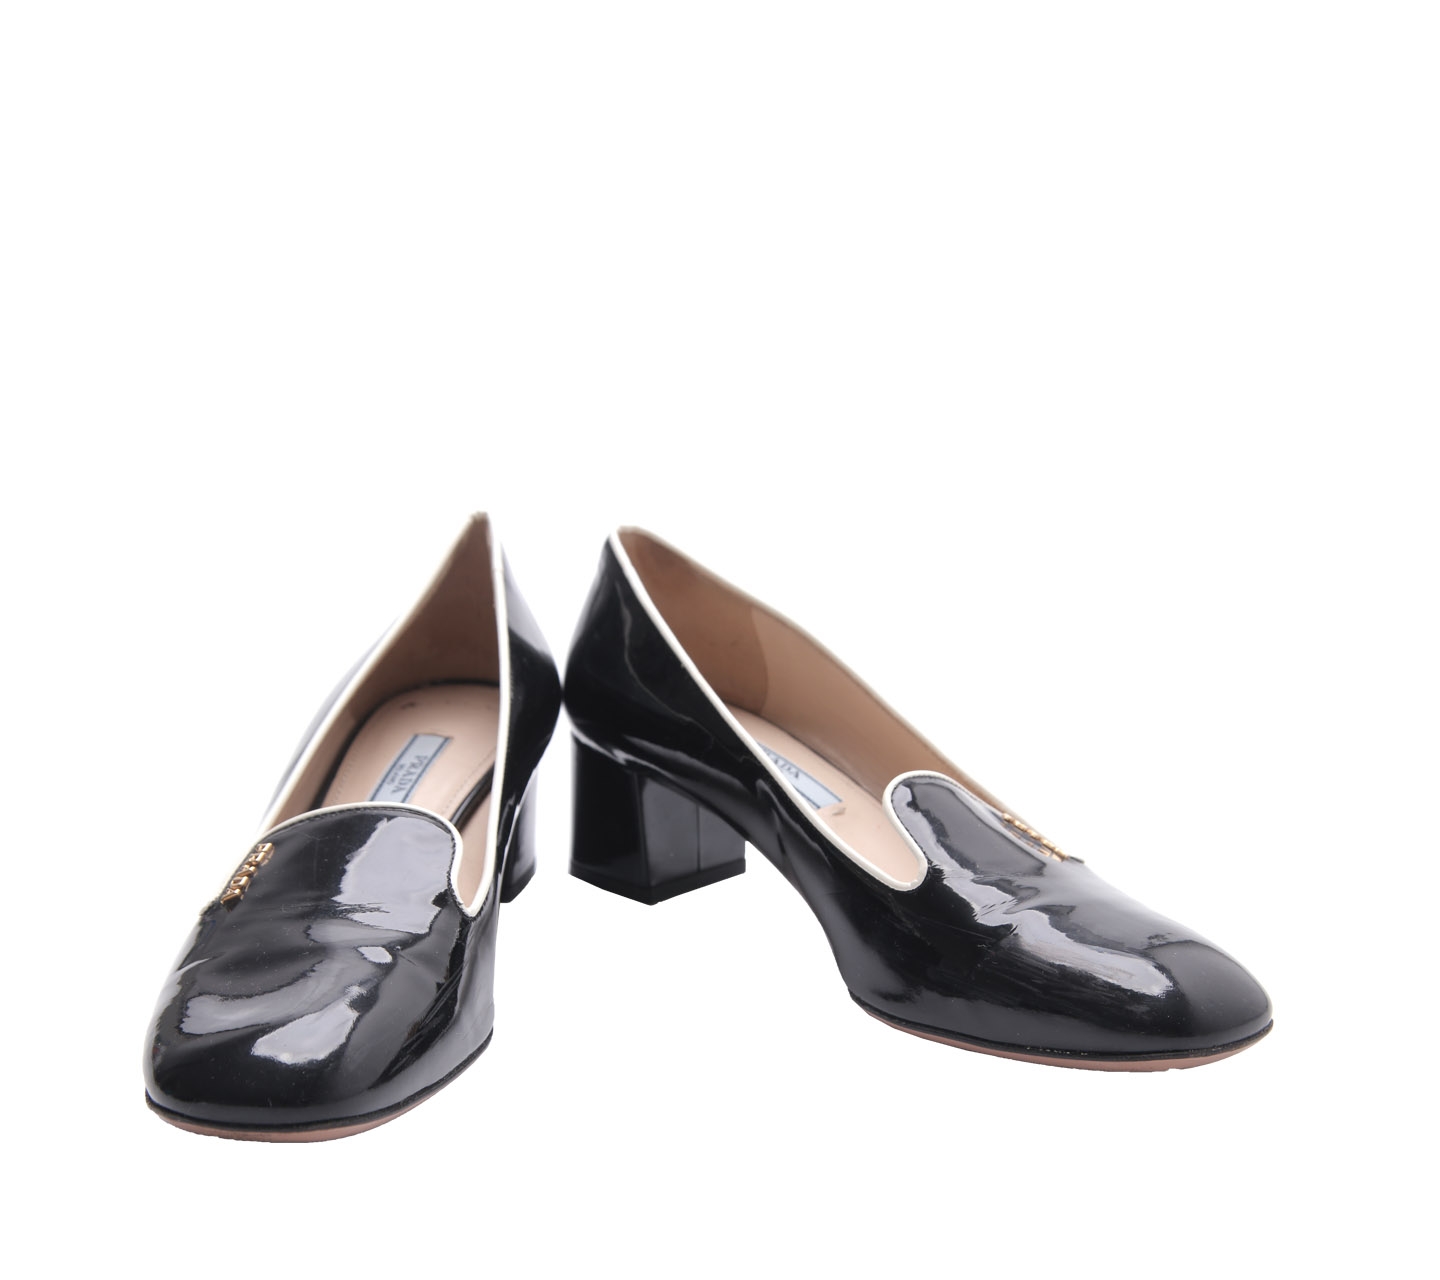 Prada Black Patent Leather Loafers Heels